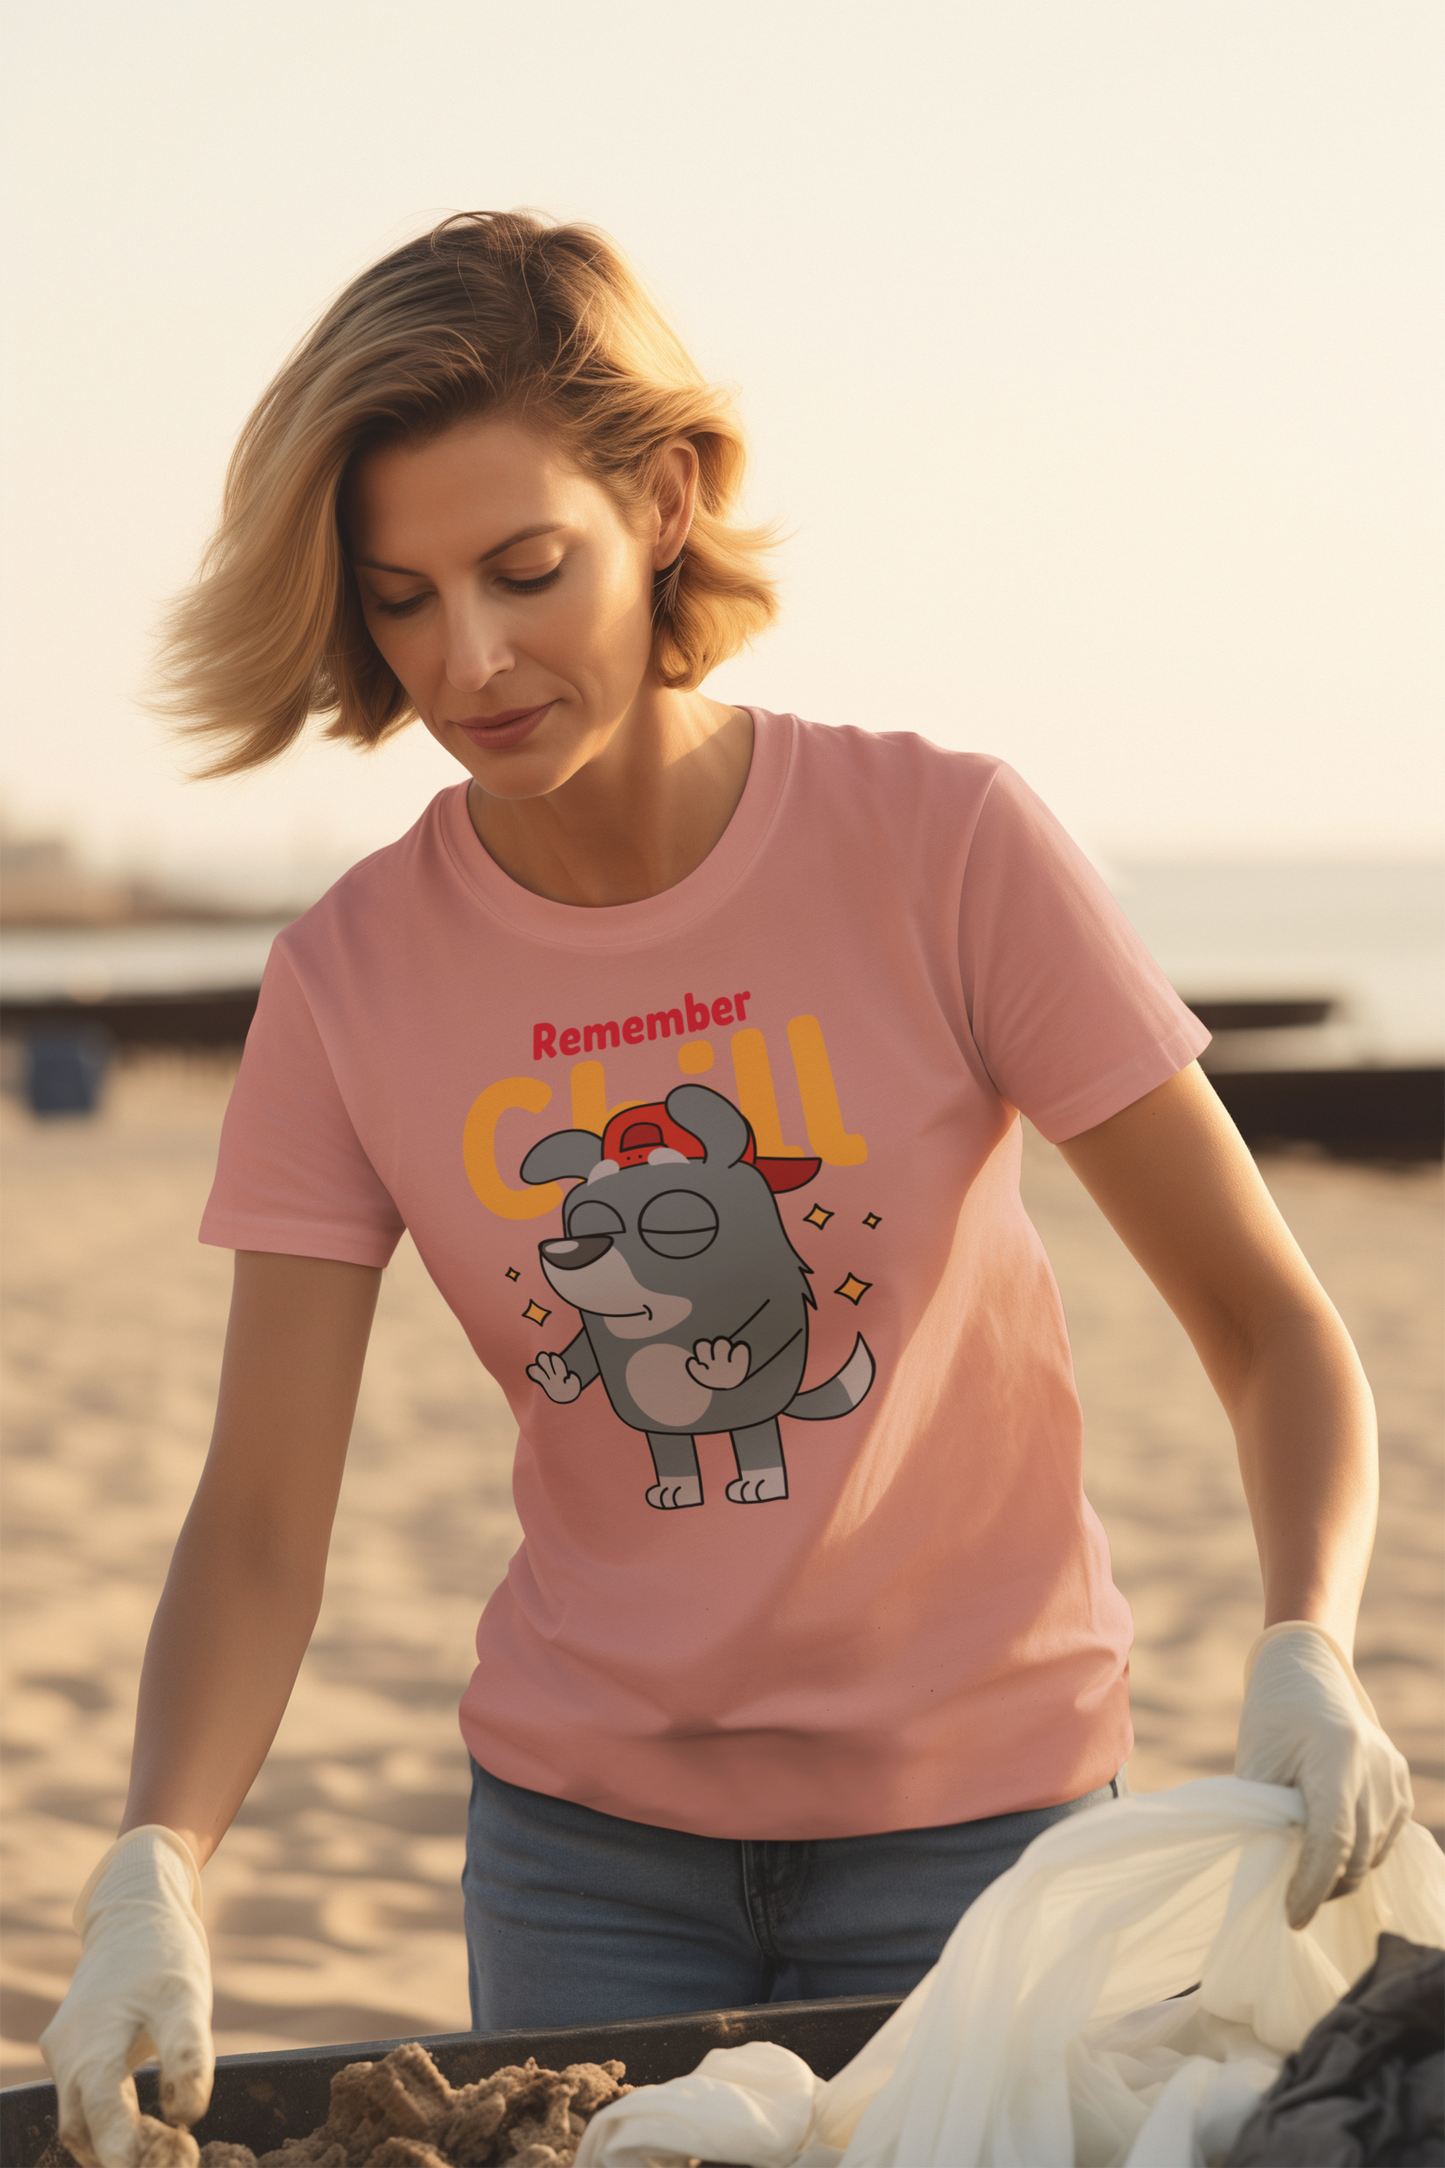 Women's Printed T-Shirts